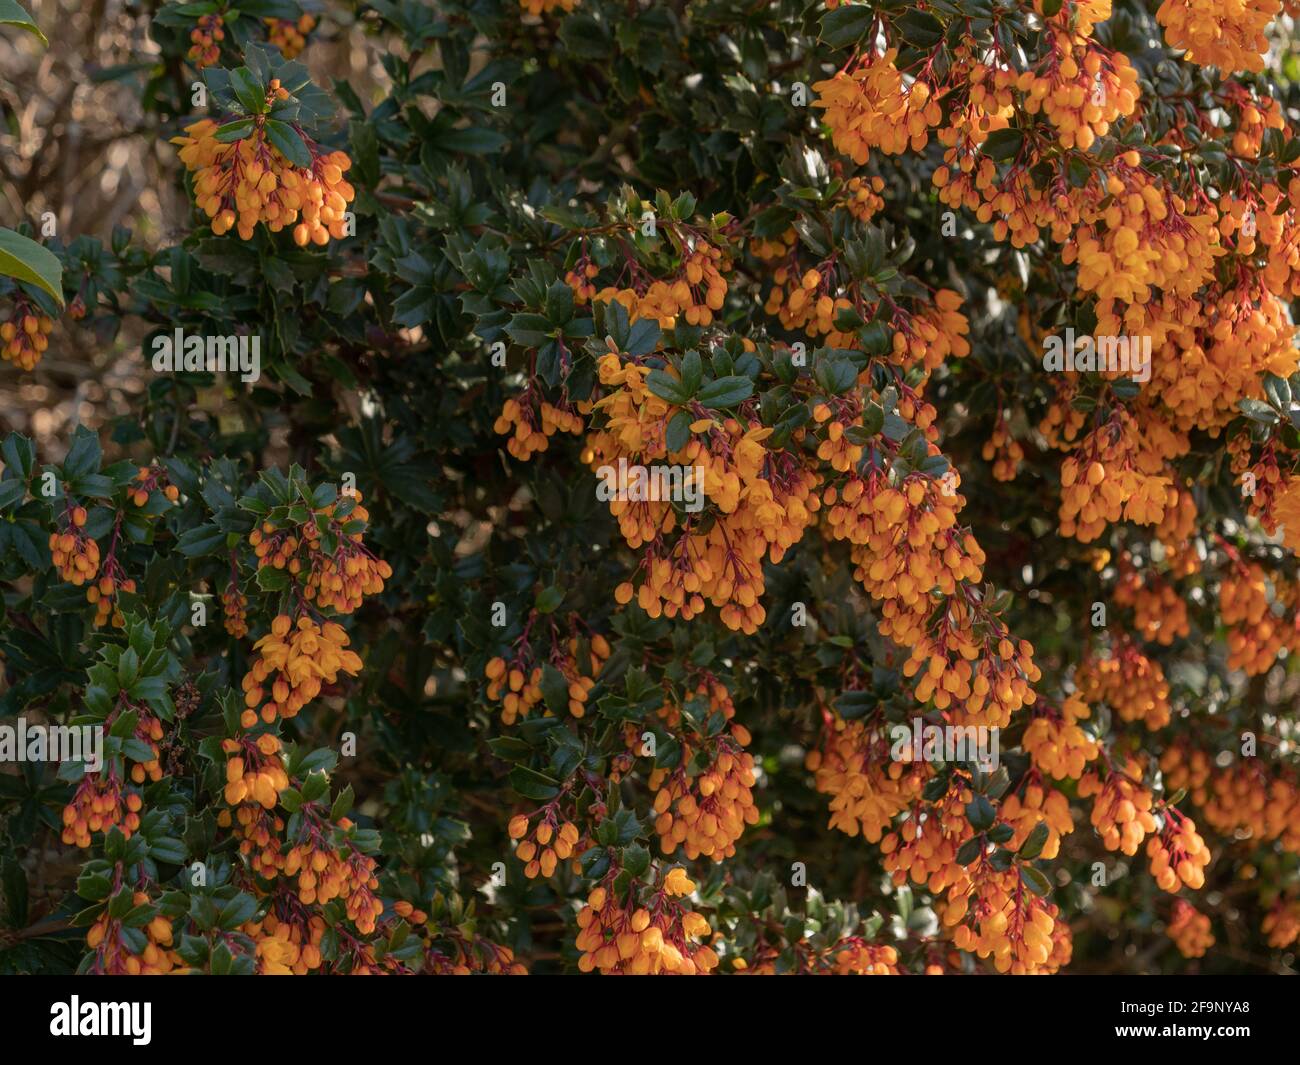 Orange flowers of the evergreen garden shrub Berberis darwinii seen in England, UK in April. Stock Photo